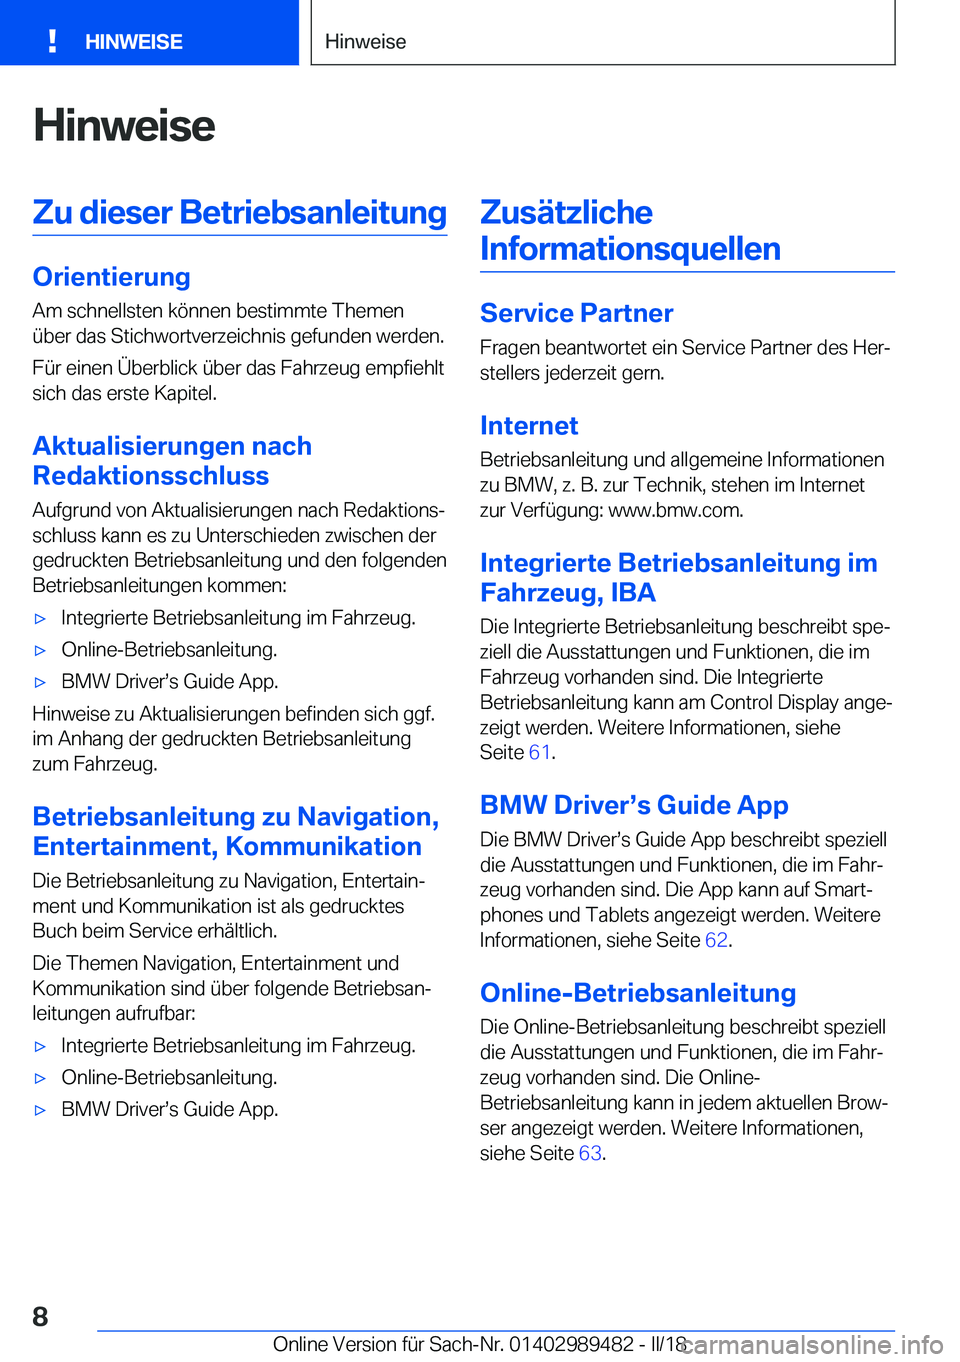 BMW M3 2018  Betriebsanleitungen (in German) �H�i�n�w�e�i�s�e�;�u��d�i�e�s�e�r��B�e�t�r�i�e�b�s�a�n�l�e�i�t�u�n�g
�O�r�i�e�n�t�i�e�r�u�n�g�A�m� �s�c�h�n�e�l�l�s�t�e�n� �k�